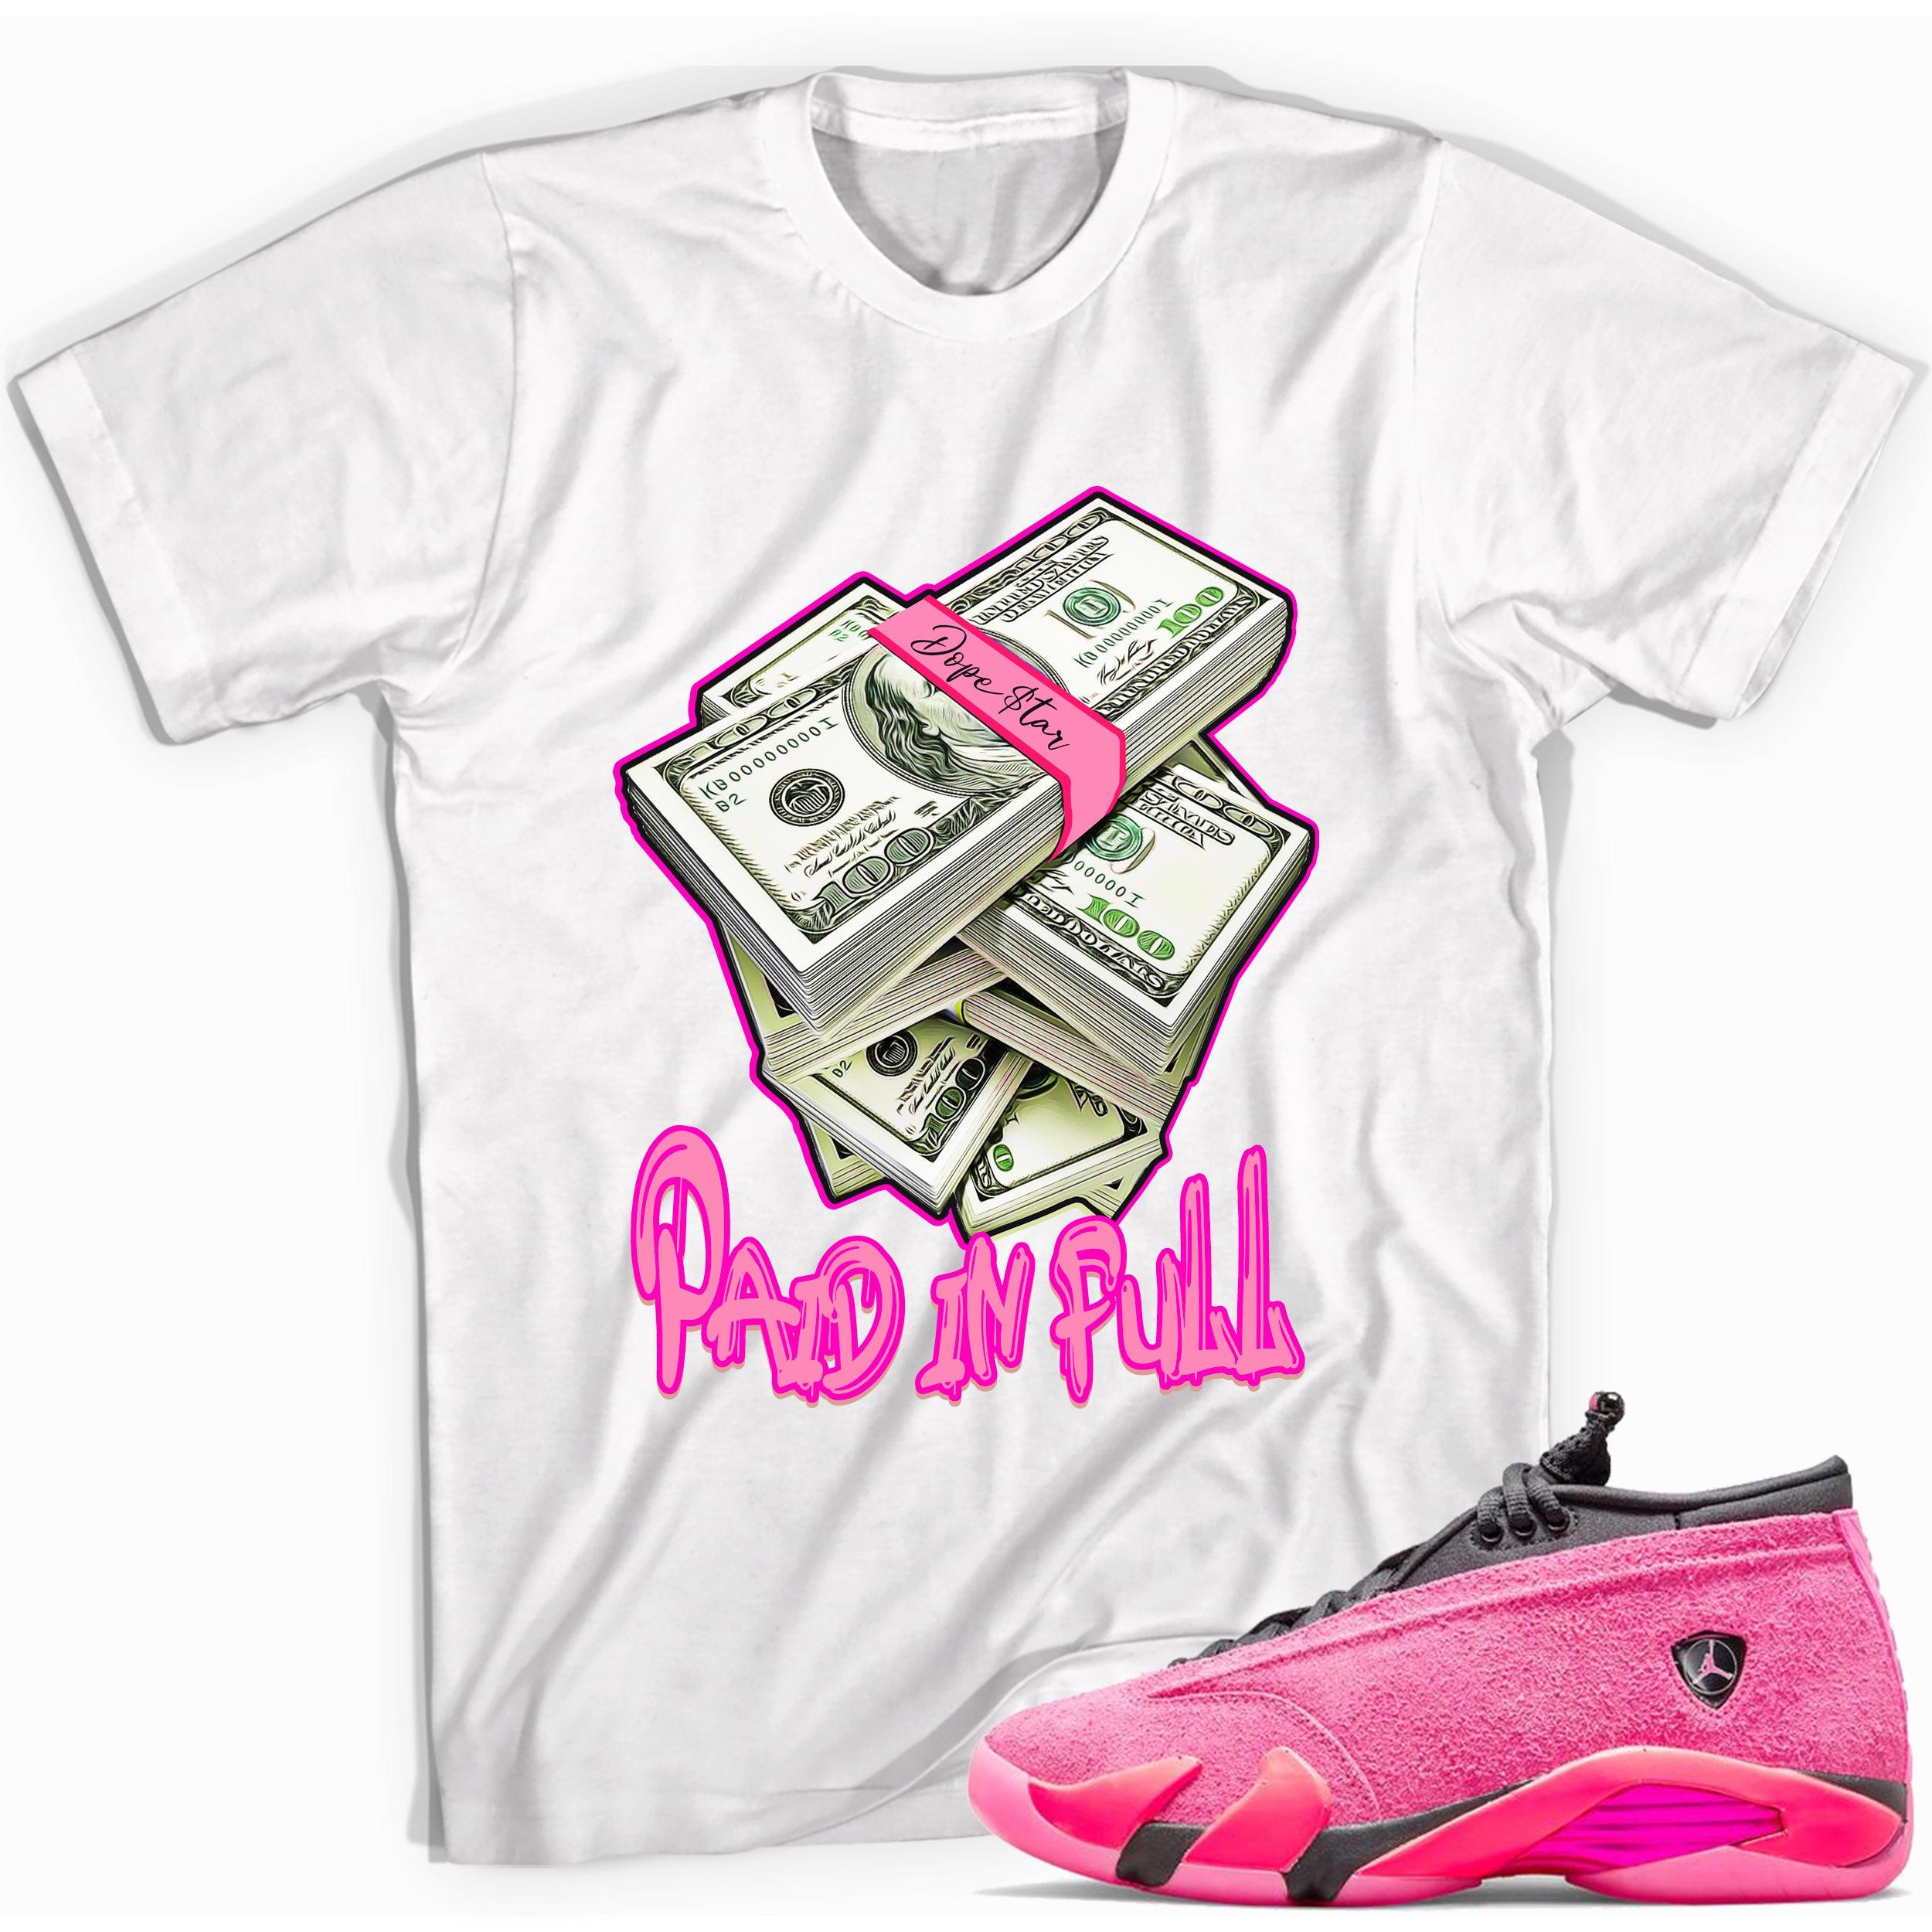 Paid In Full Shirt AJ 14s Low Shocking Pink photo